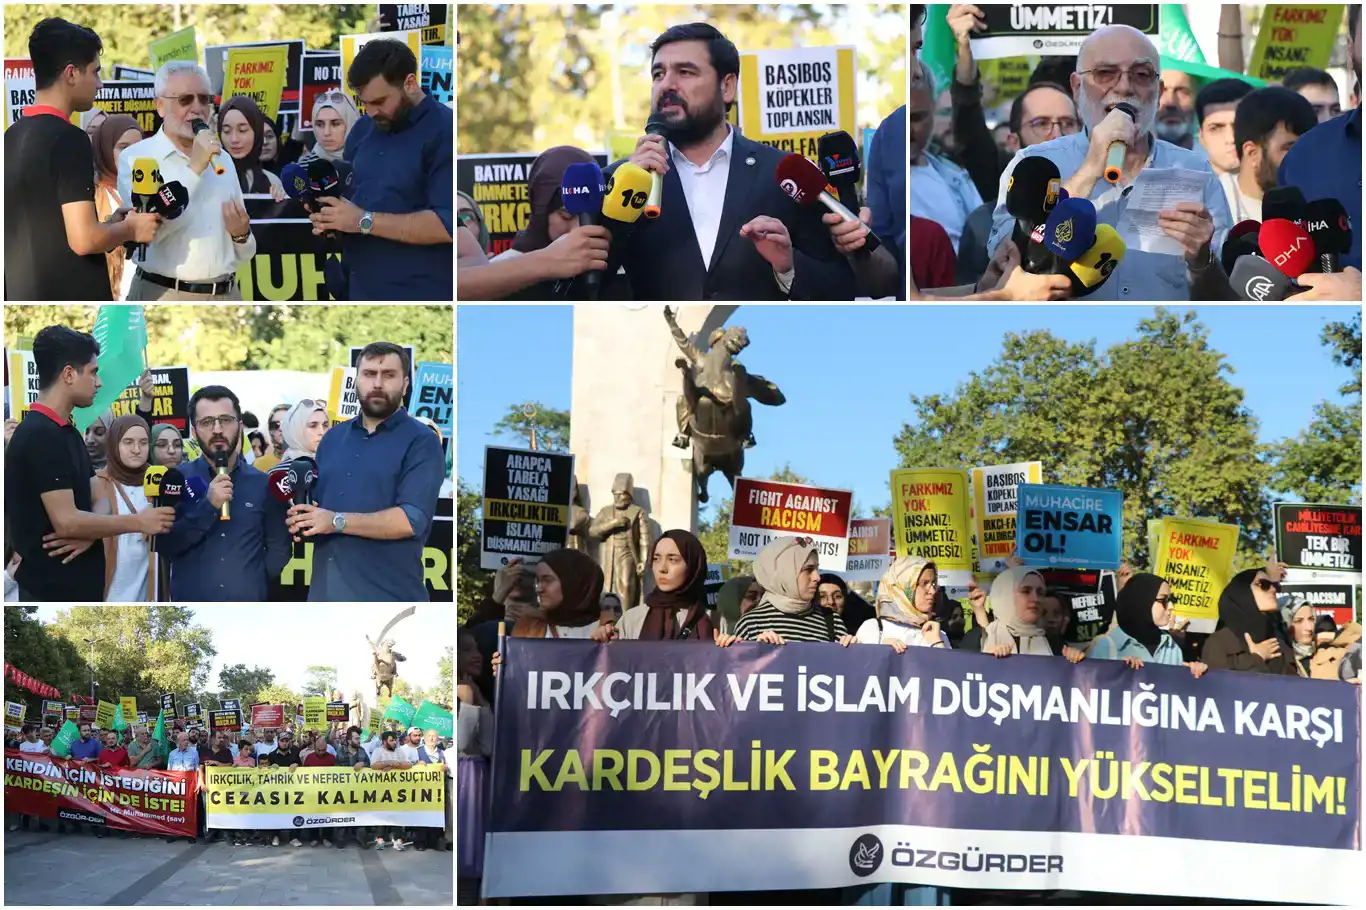 Rally in Istanbul addresses pressing issue of racism in Türkiye